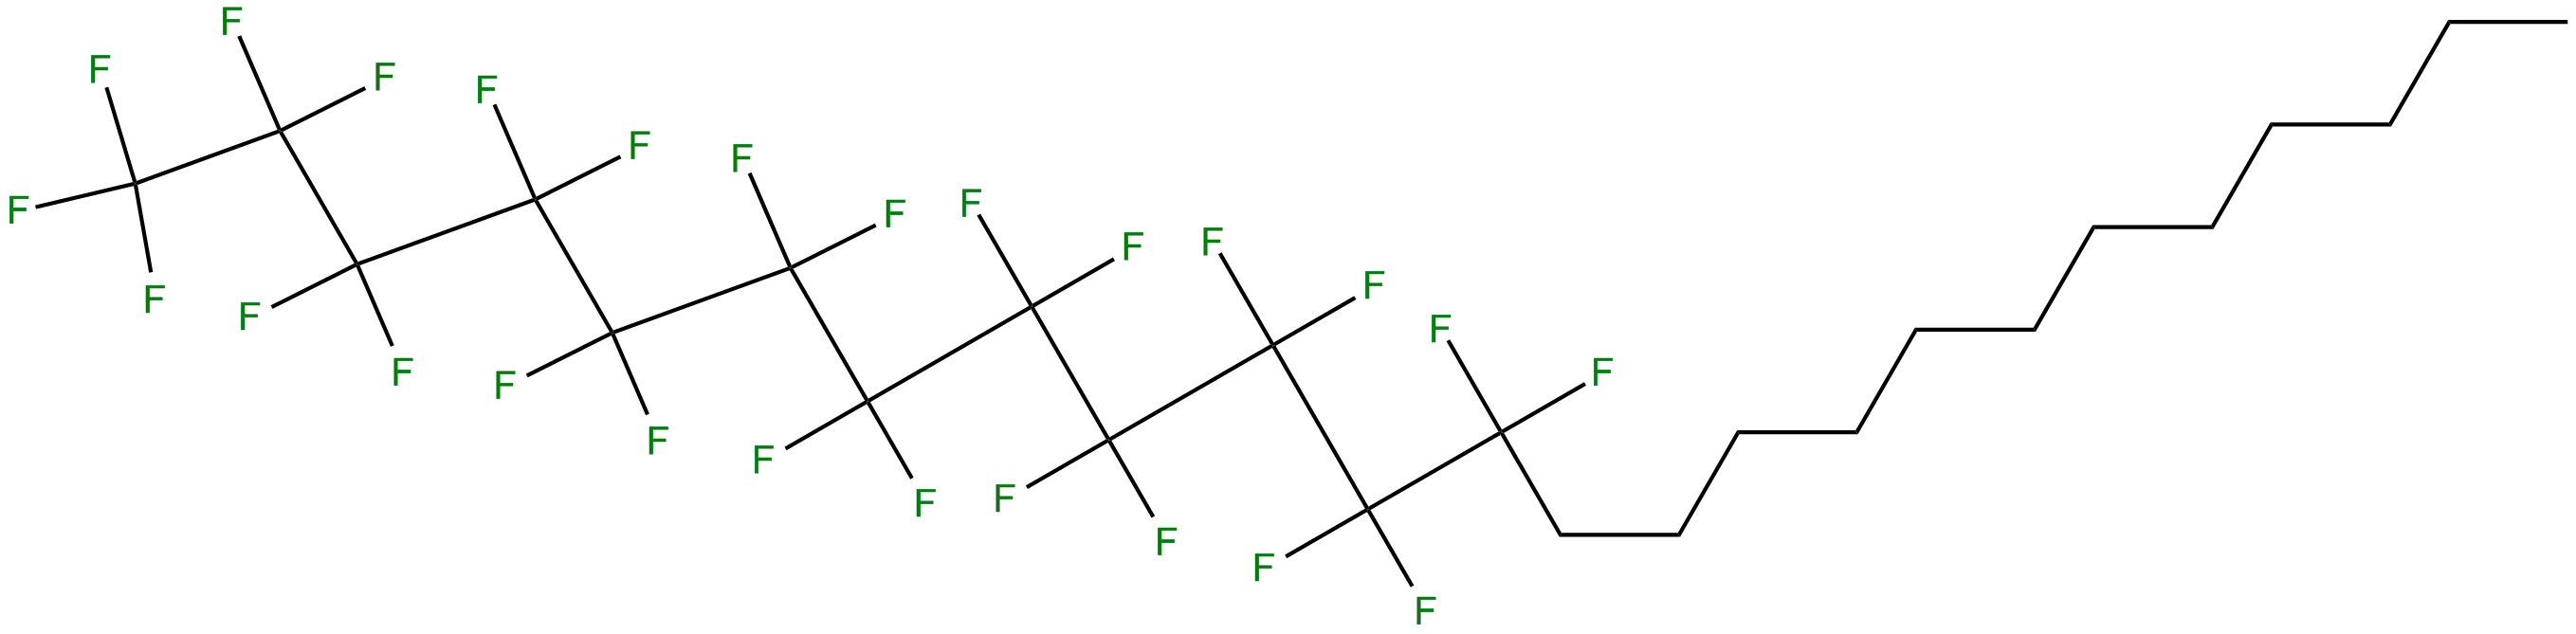 Image of 1,1,1,2,2,3,3,4,4,5,5,6,6,7,7,8,8,9,9,10,10,11,11,12,12-pentacosafluorotetracosane